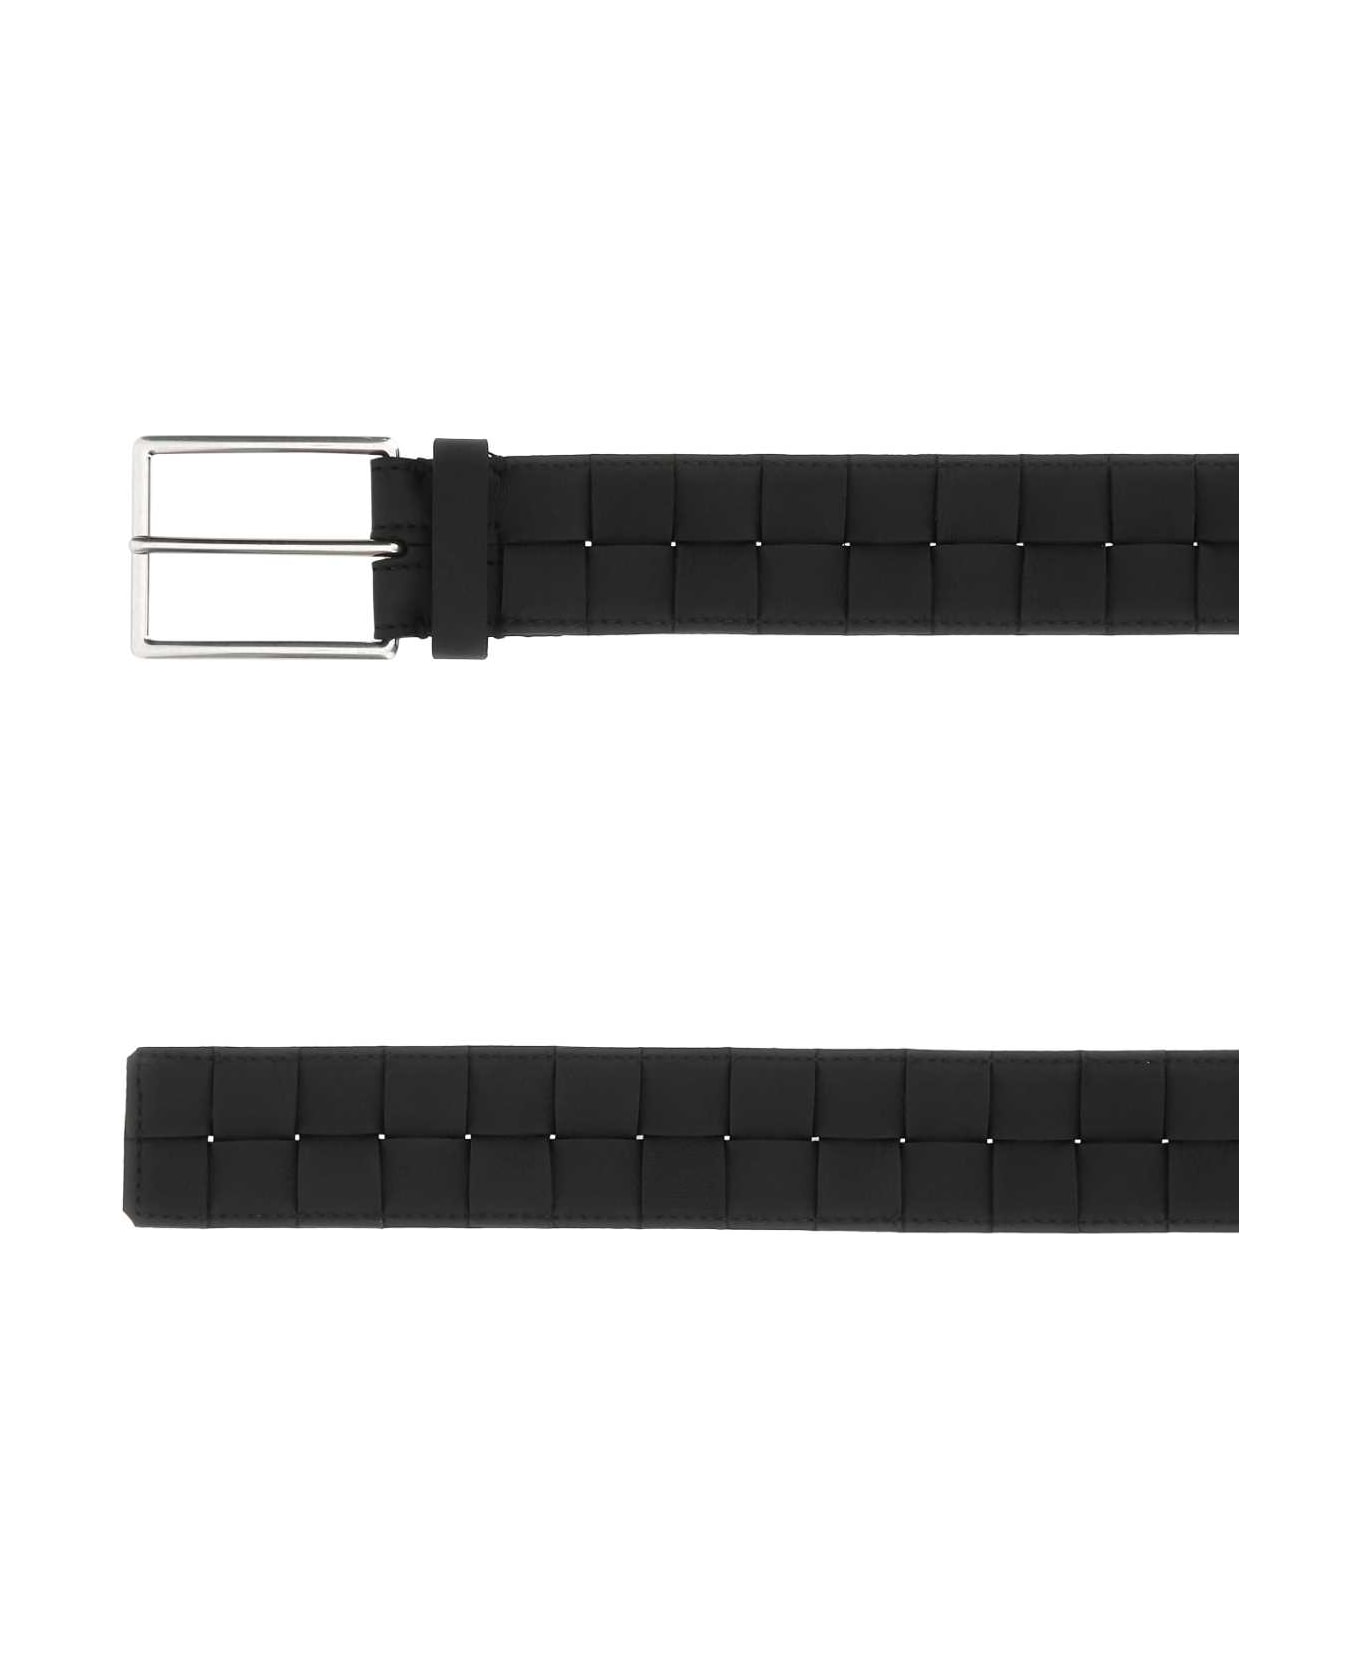 Bottega Veneta Black Leather Belt - 8803